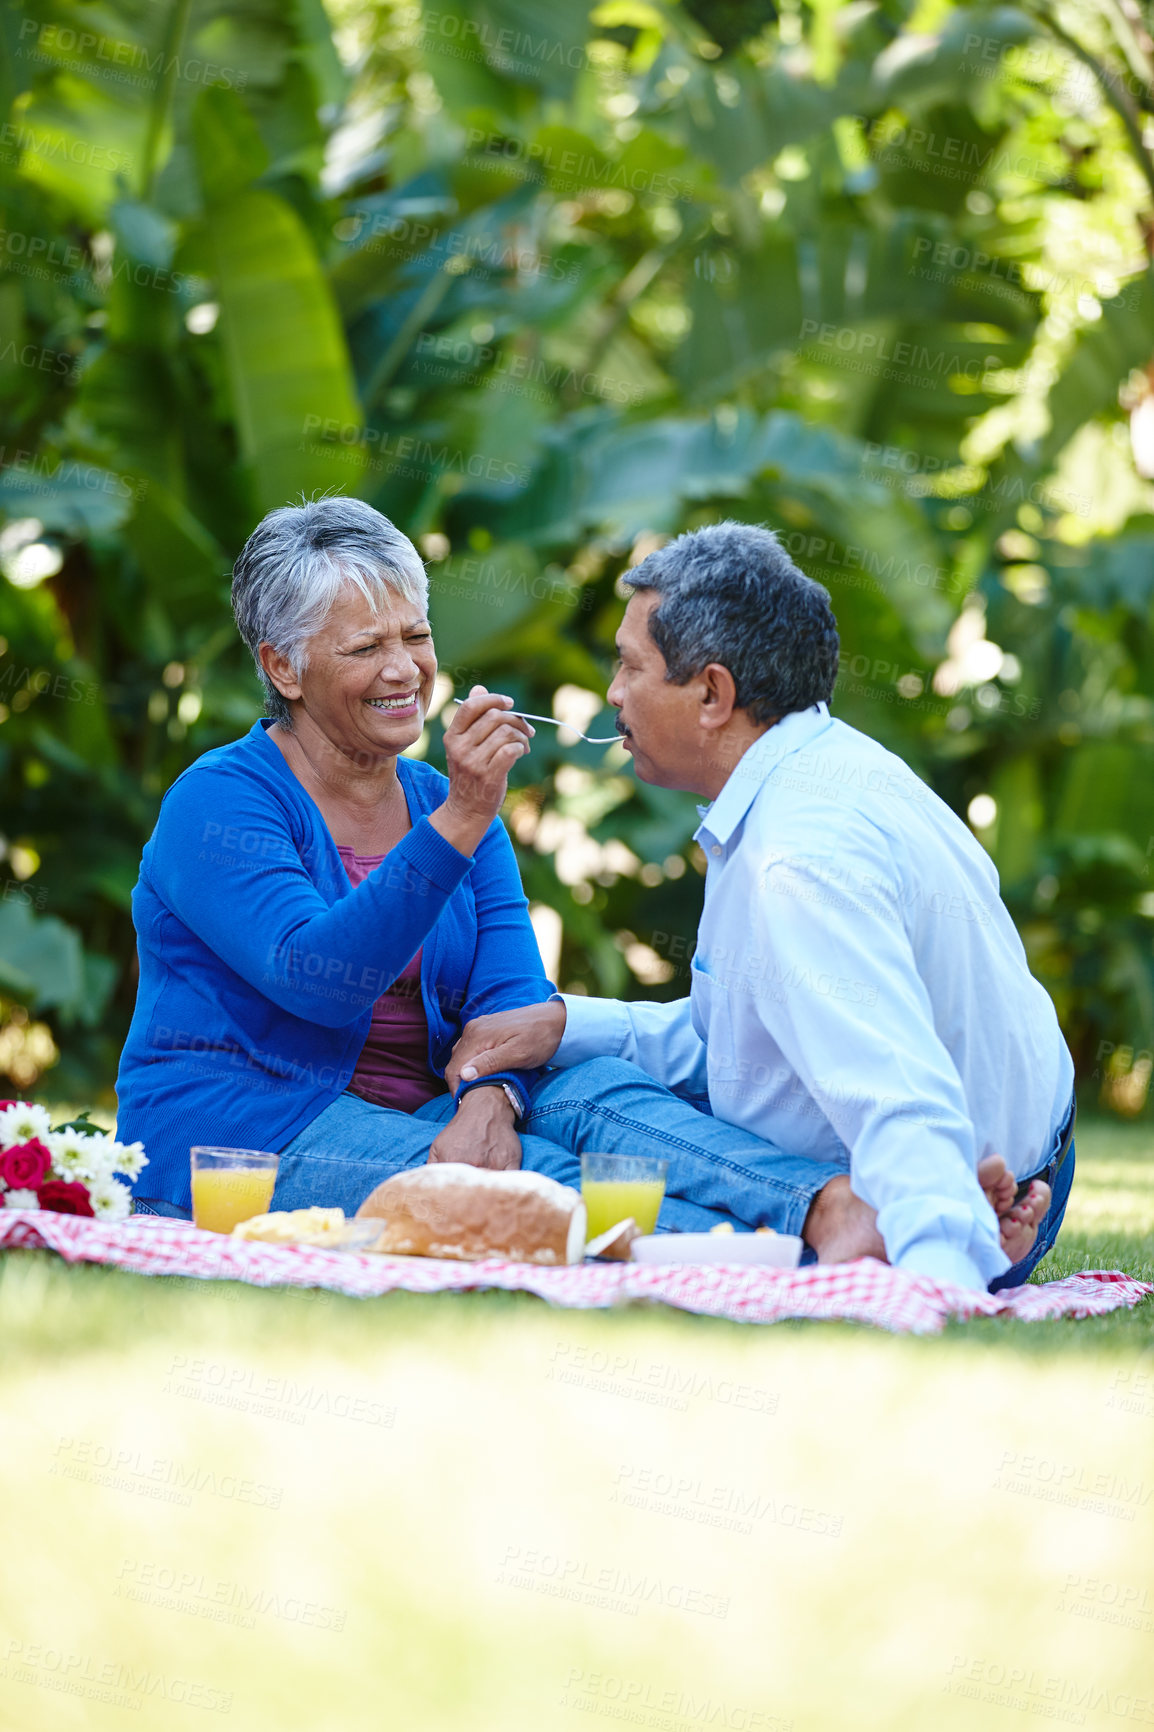 Buy stock photo Shot of a loving senior couple enjoying a picnic together outdoors